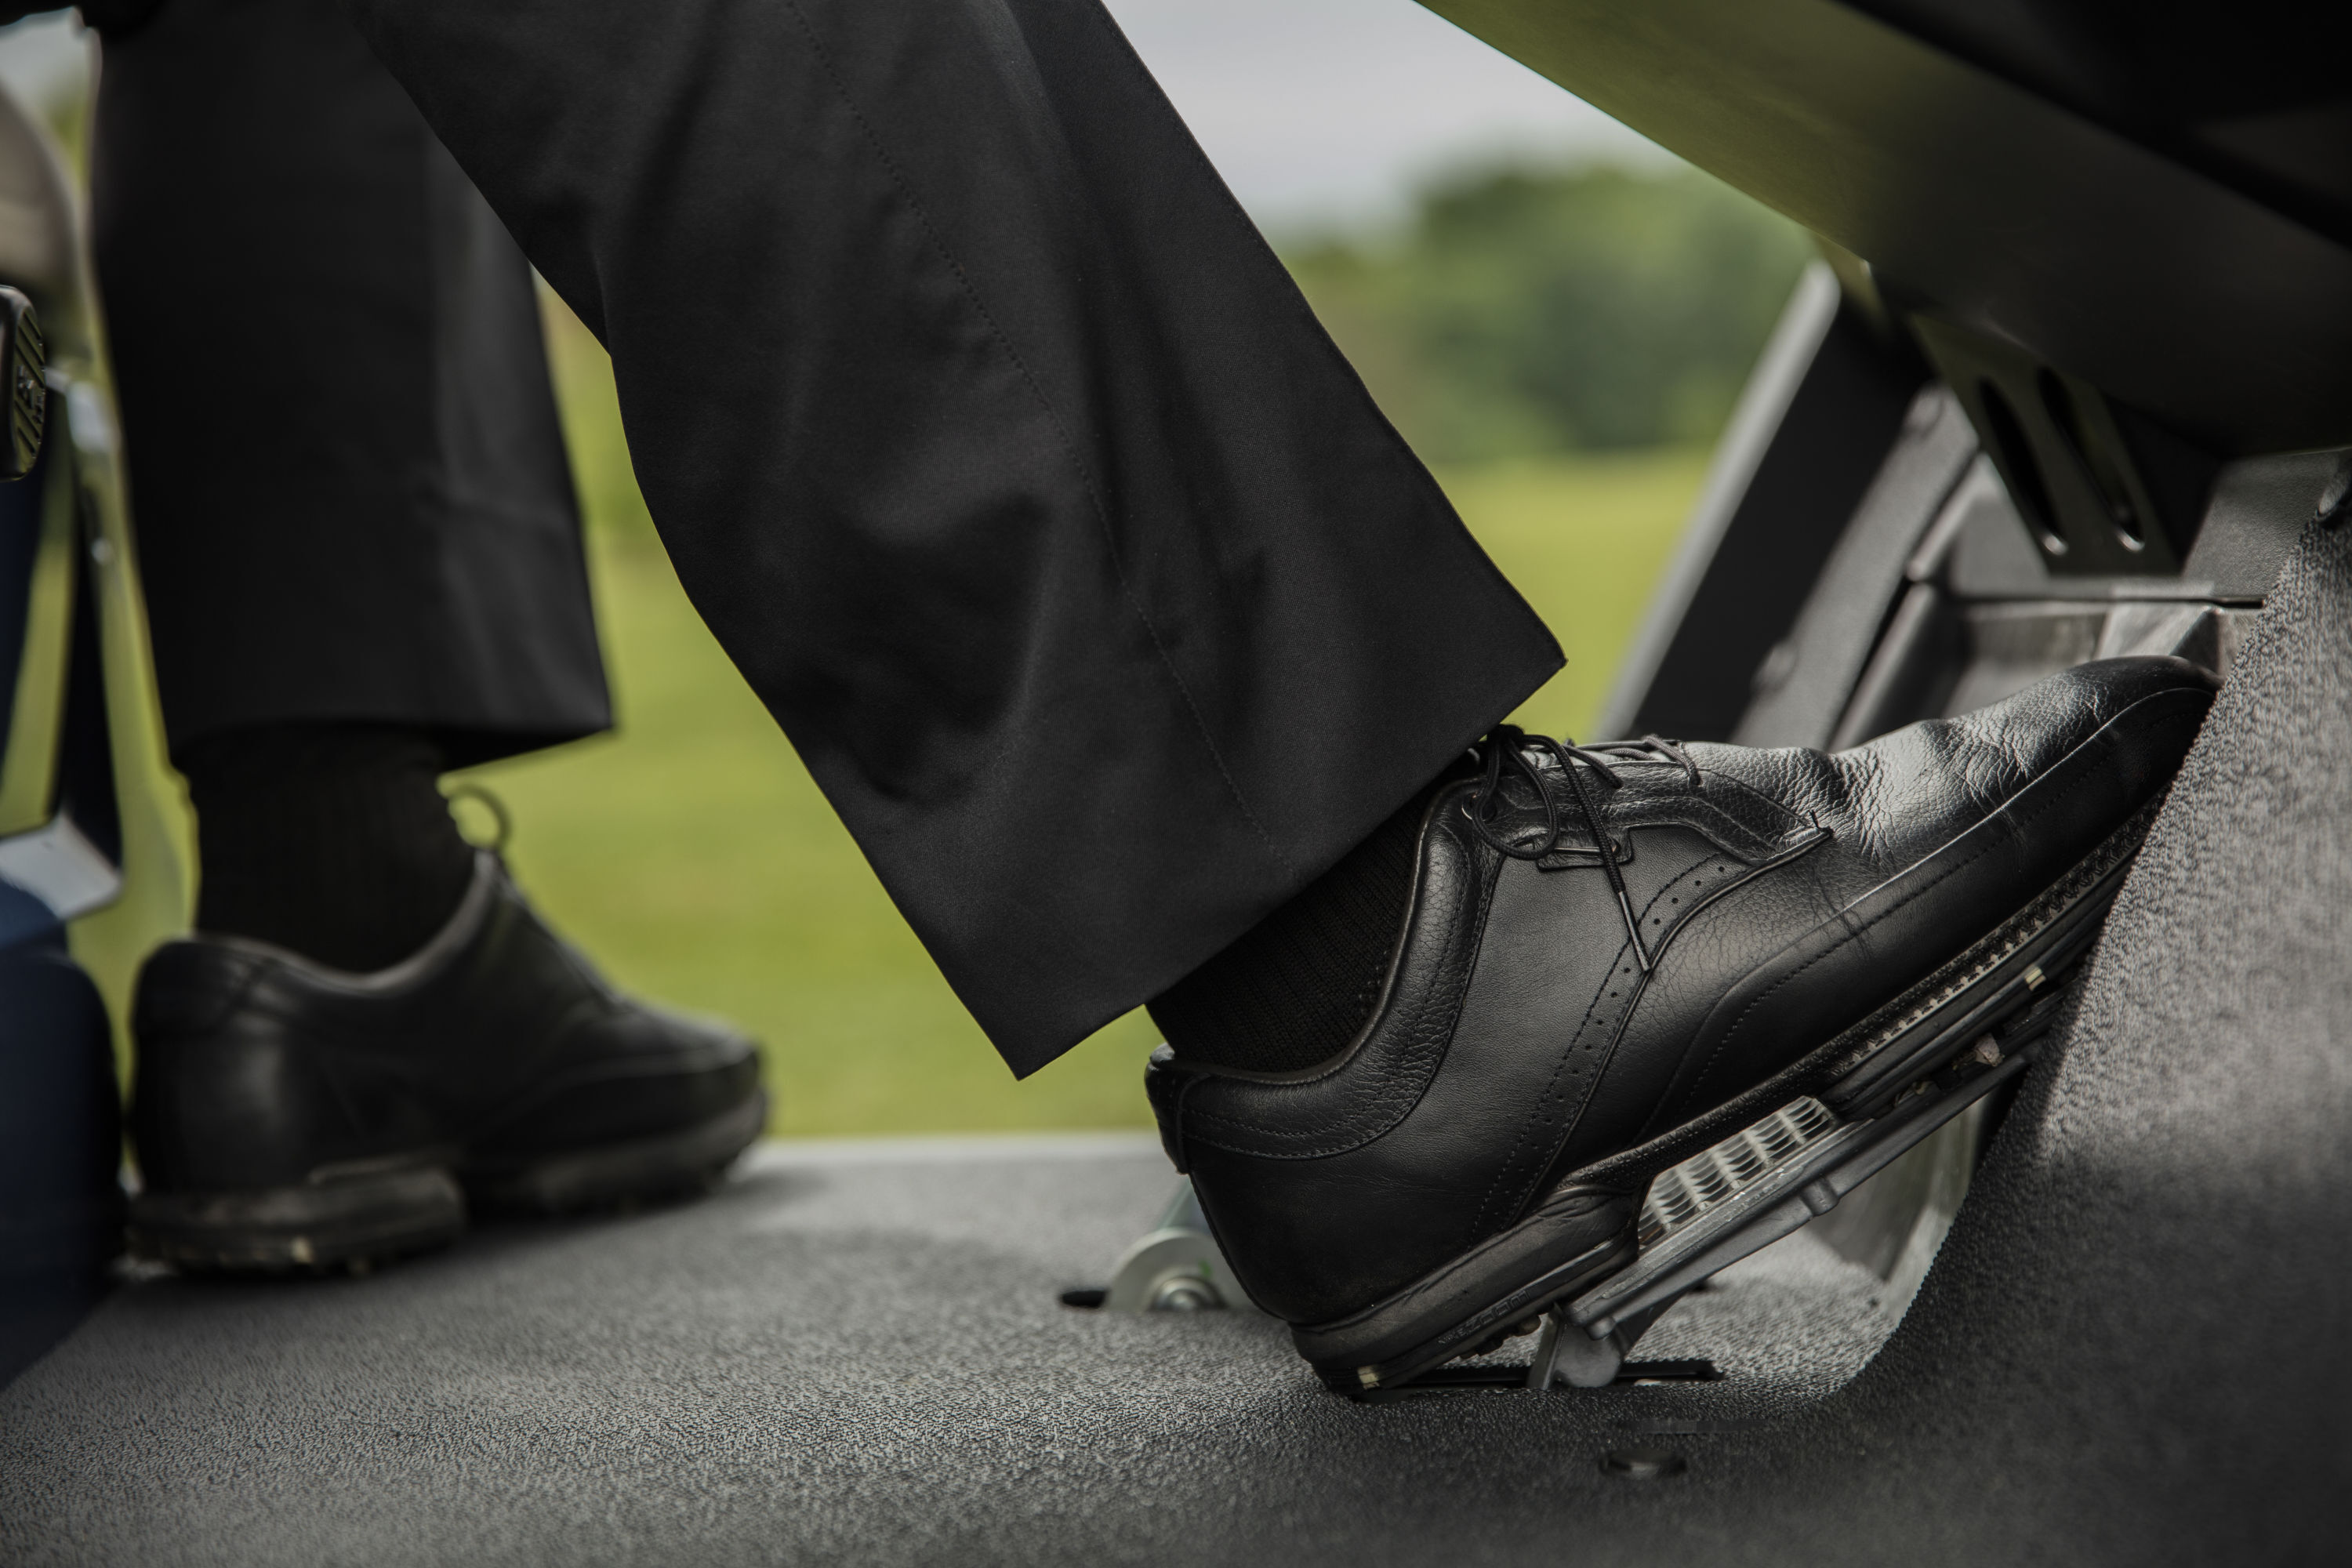 Golfer's foot on golf cart accelerator